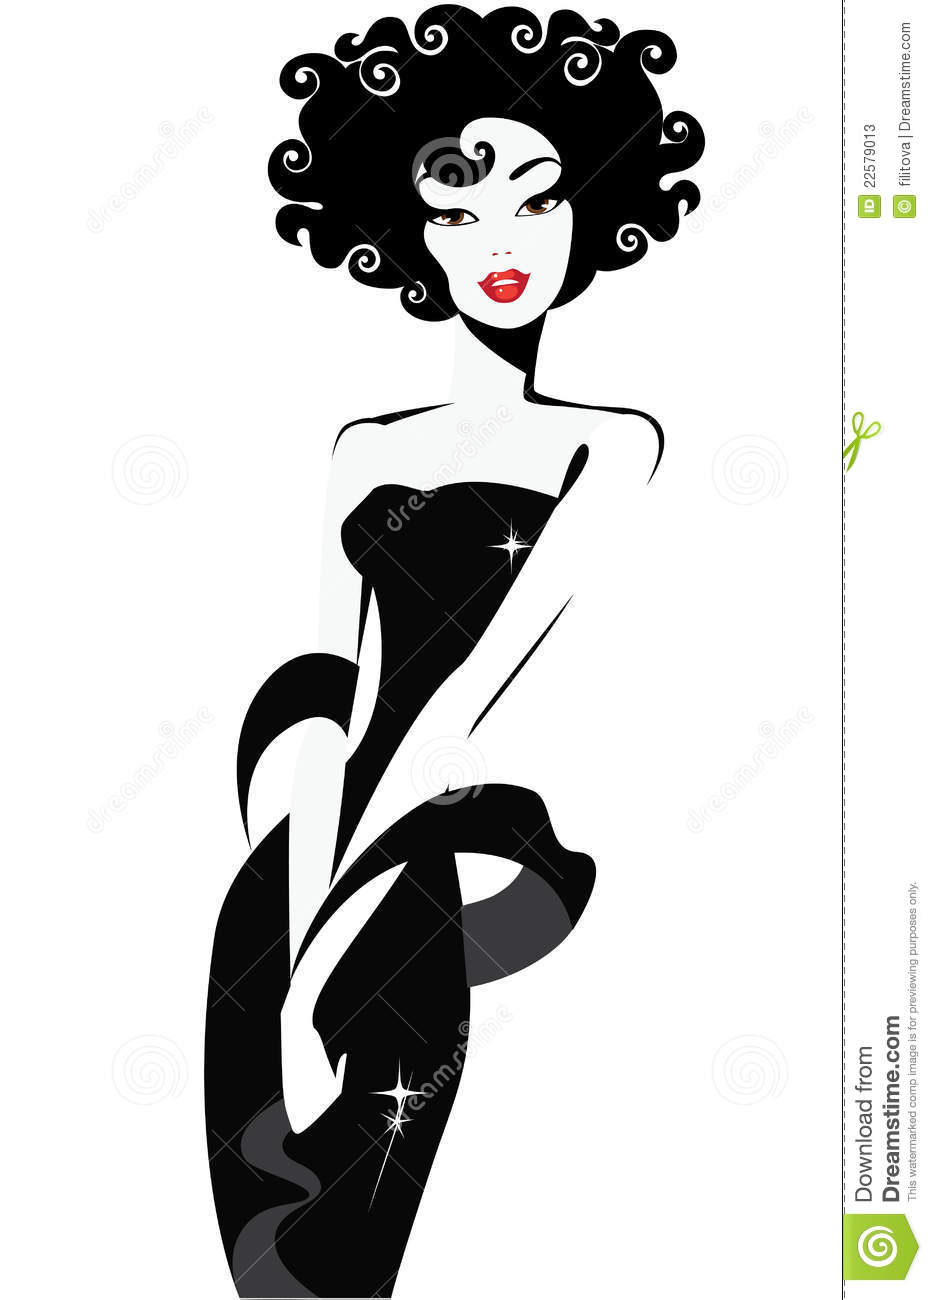 Black And White Illustration Of A Elegant Woman Stock Photos   Image